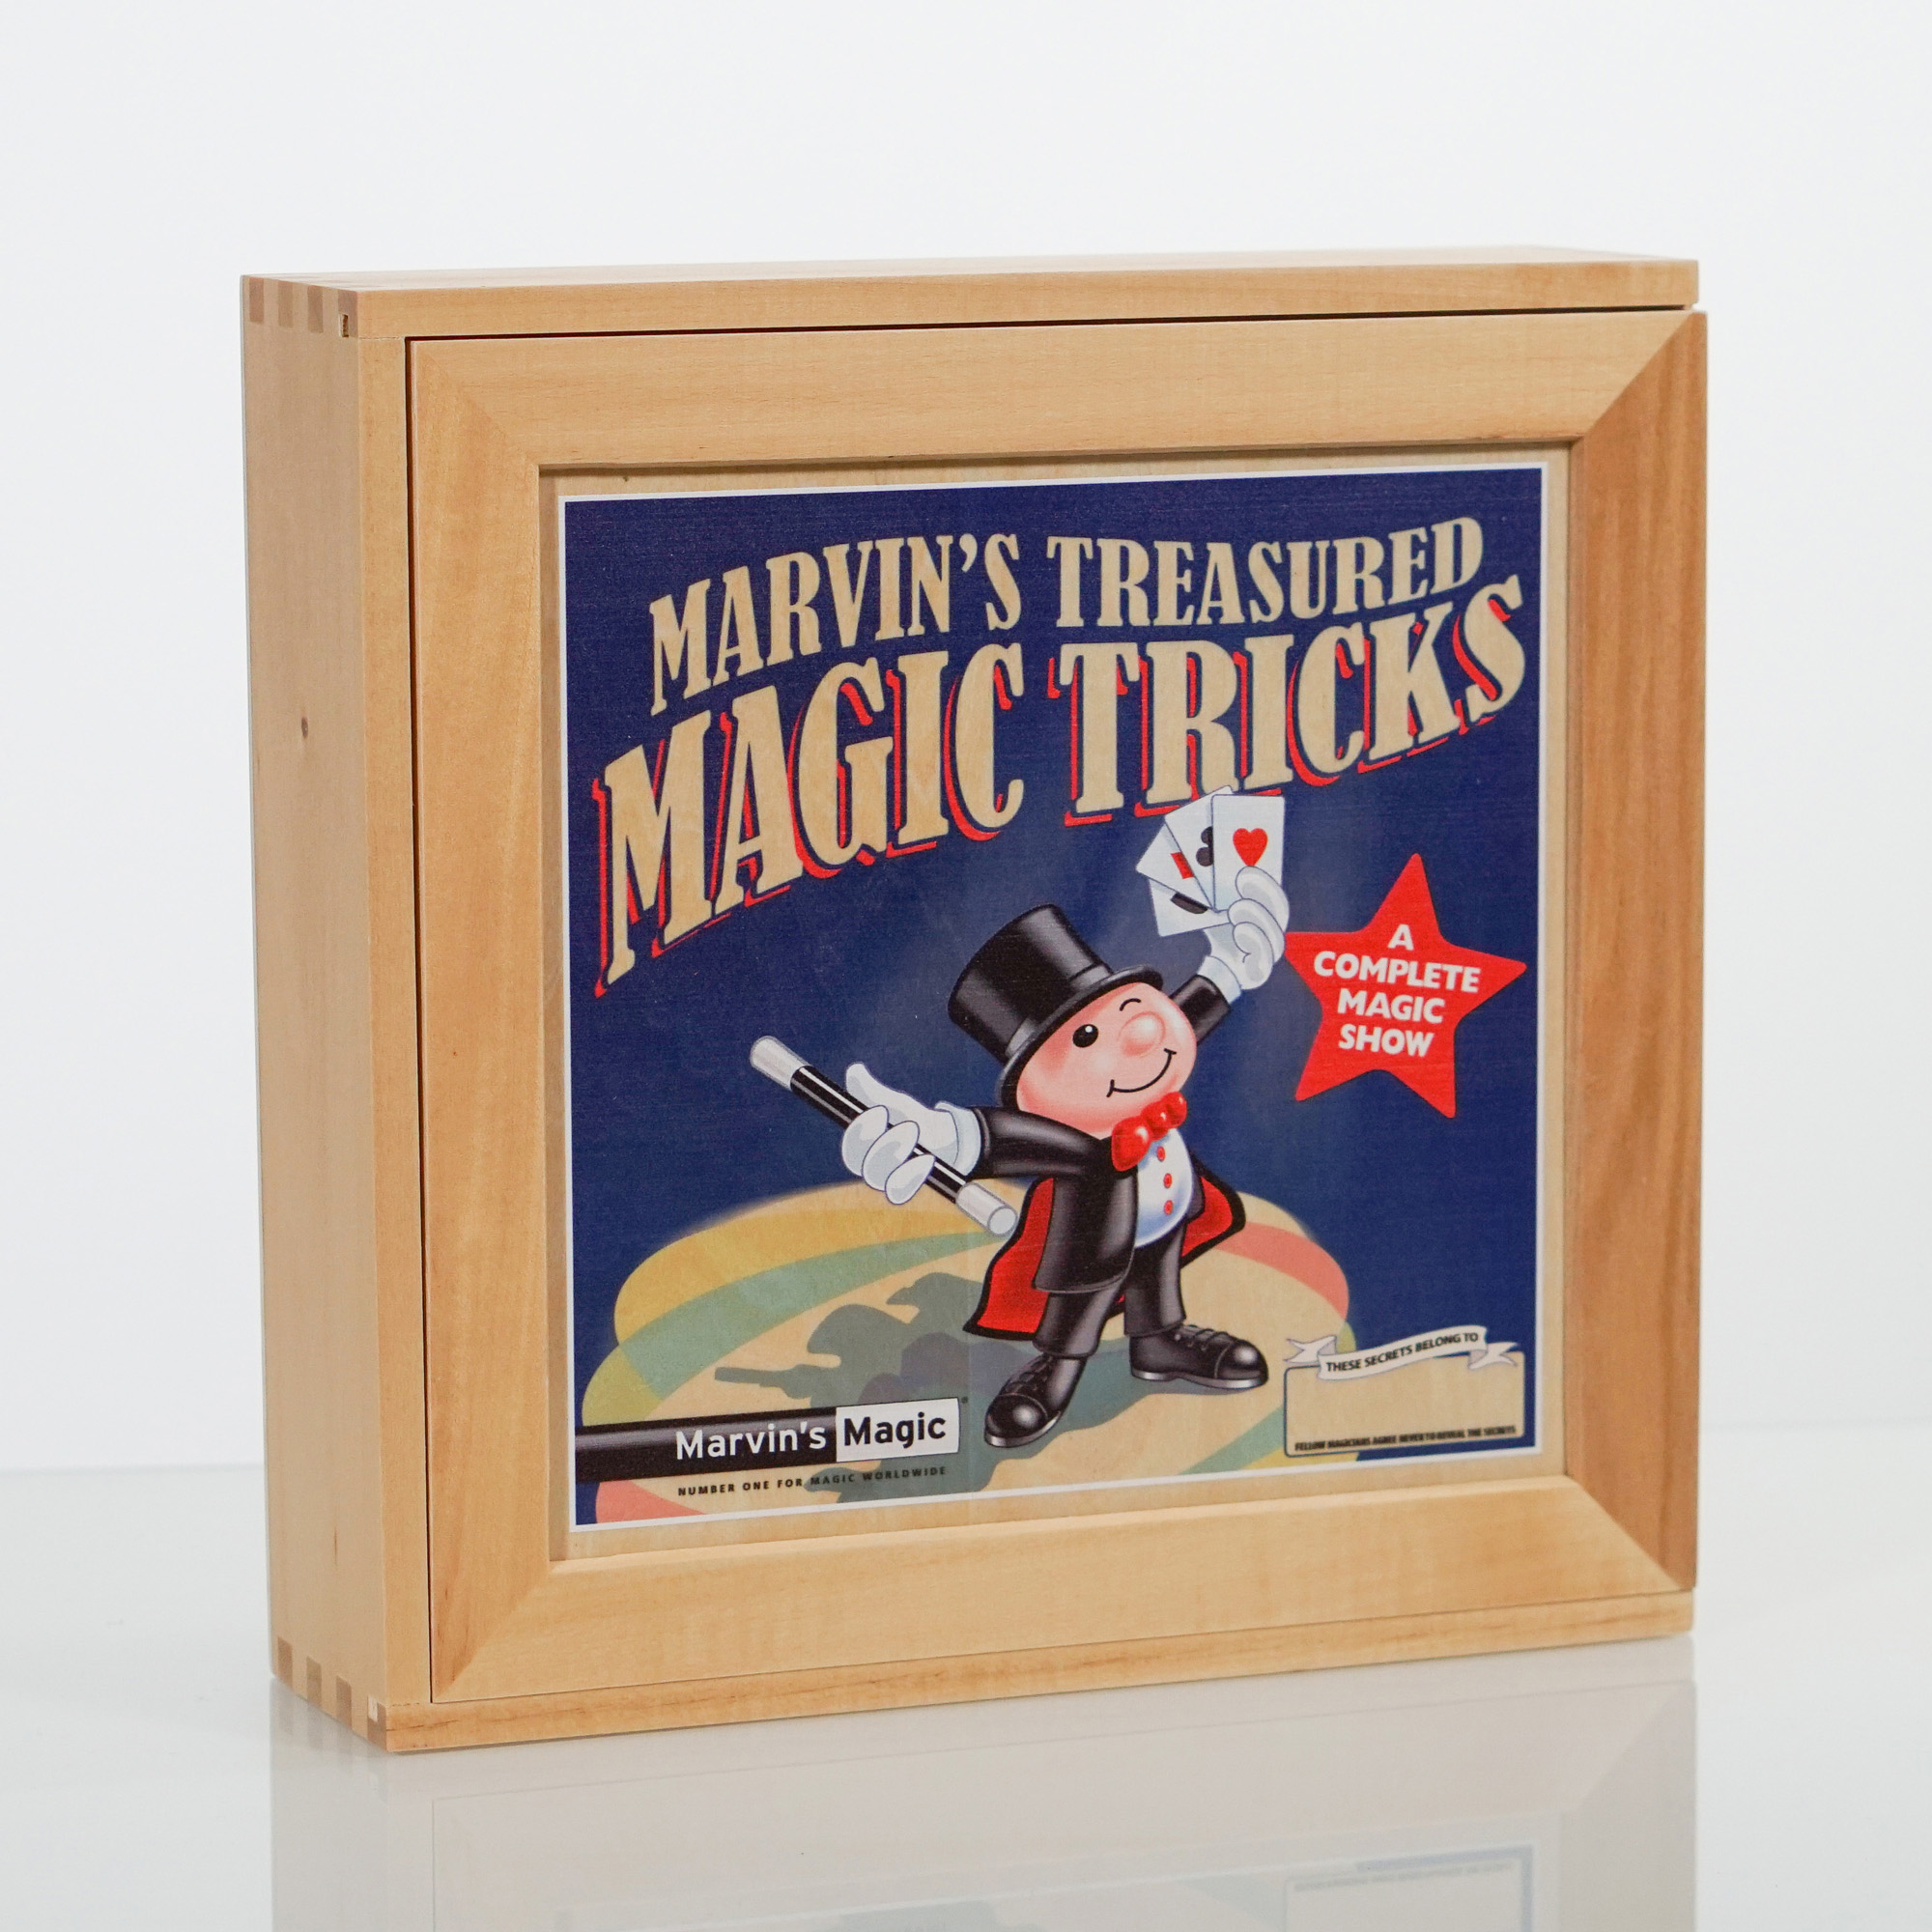 Marvin's treasured magic tricks  - Marvin's Magic